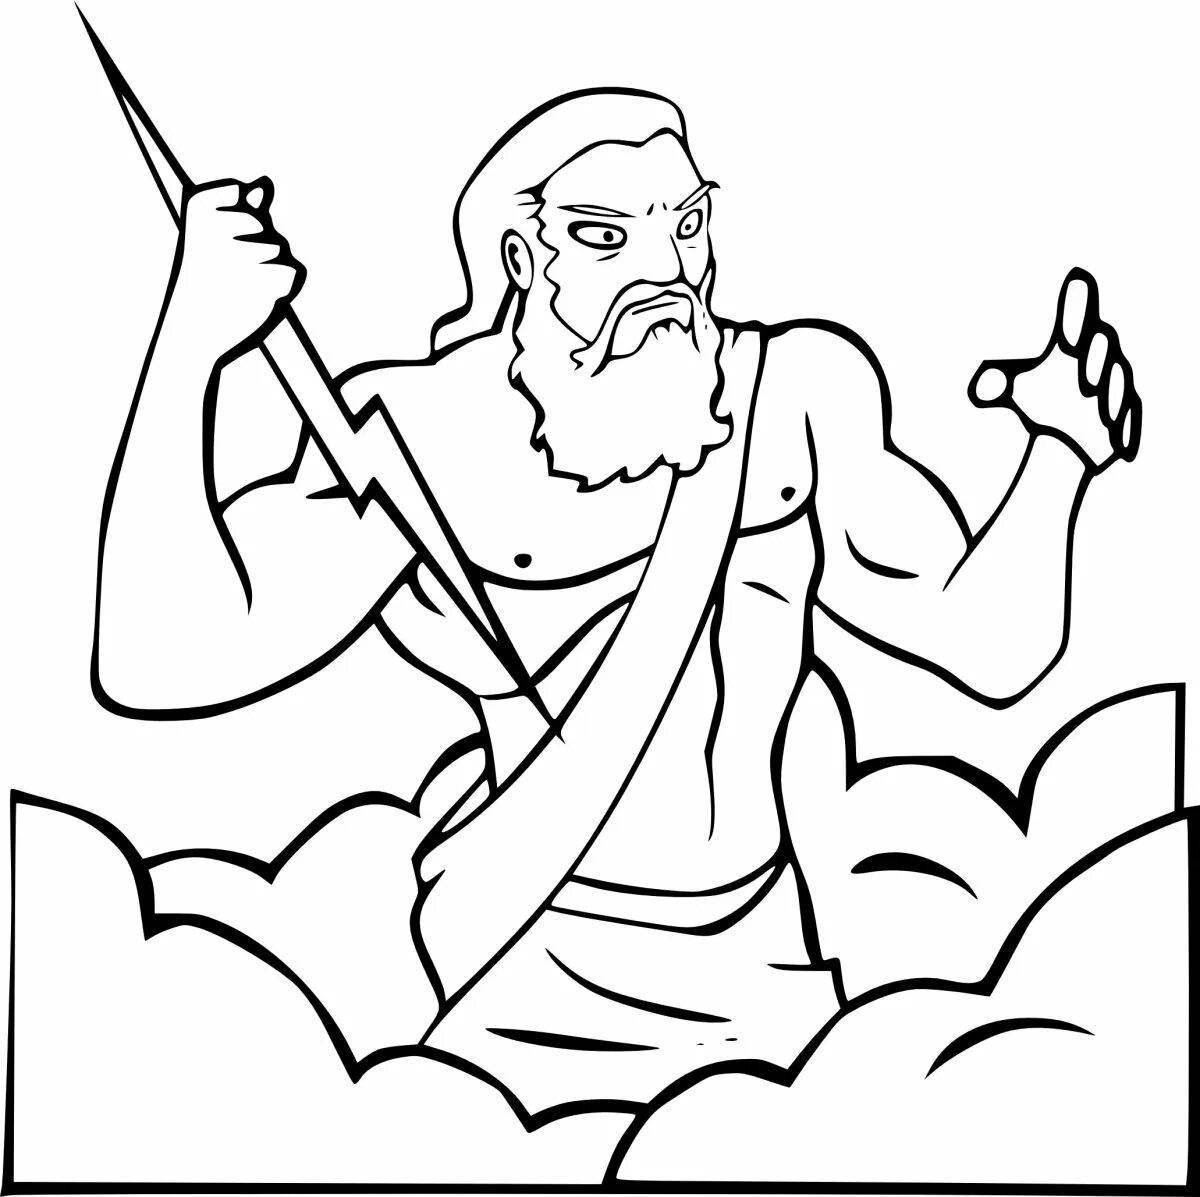 Generous coloring of the god Zeus